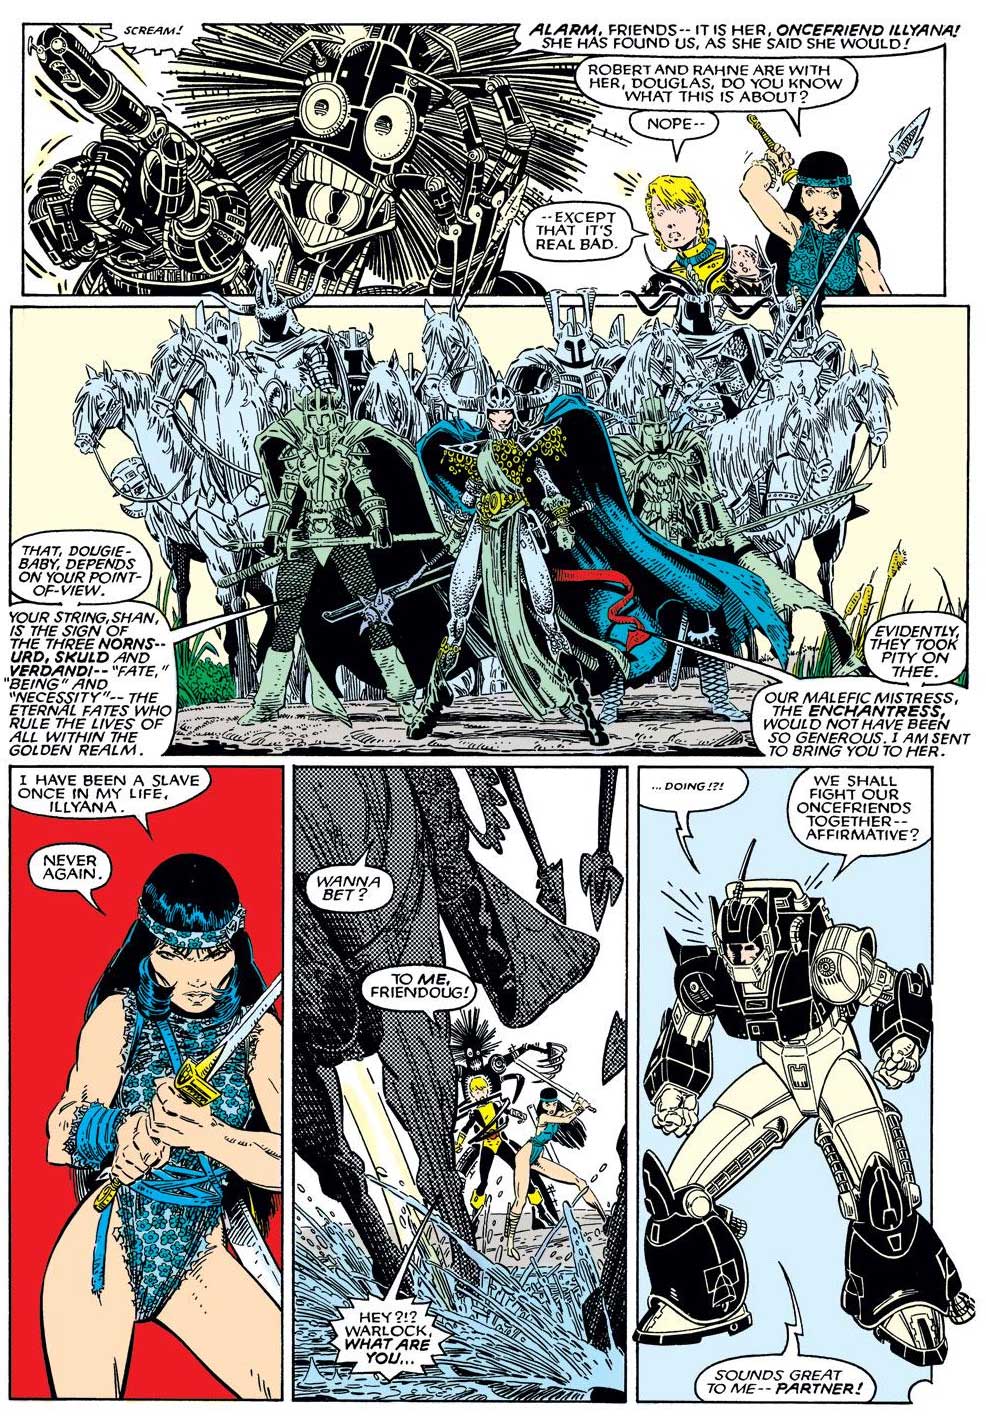 Arthur Adams on New Mutants Special #1